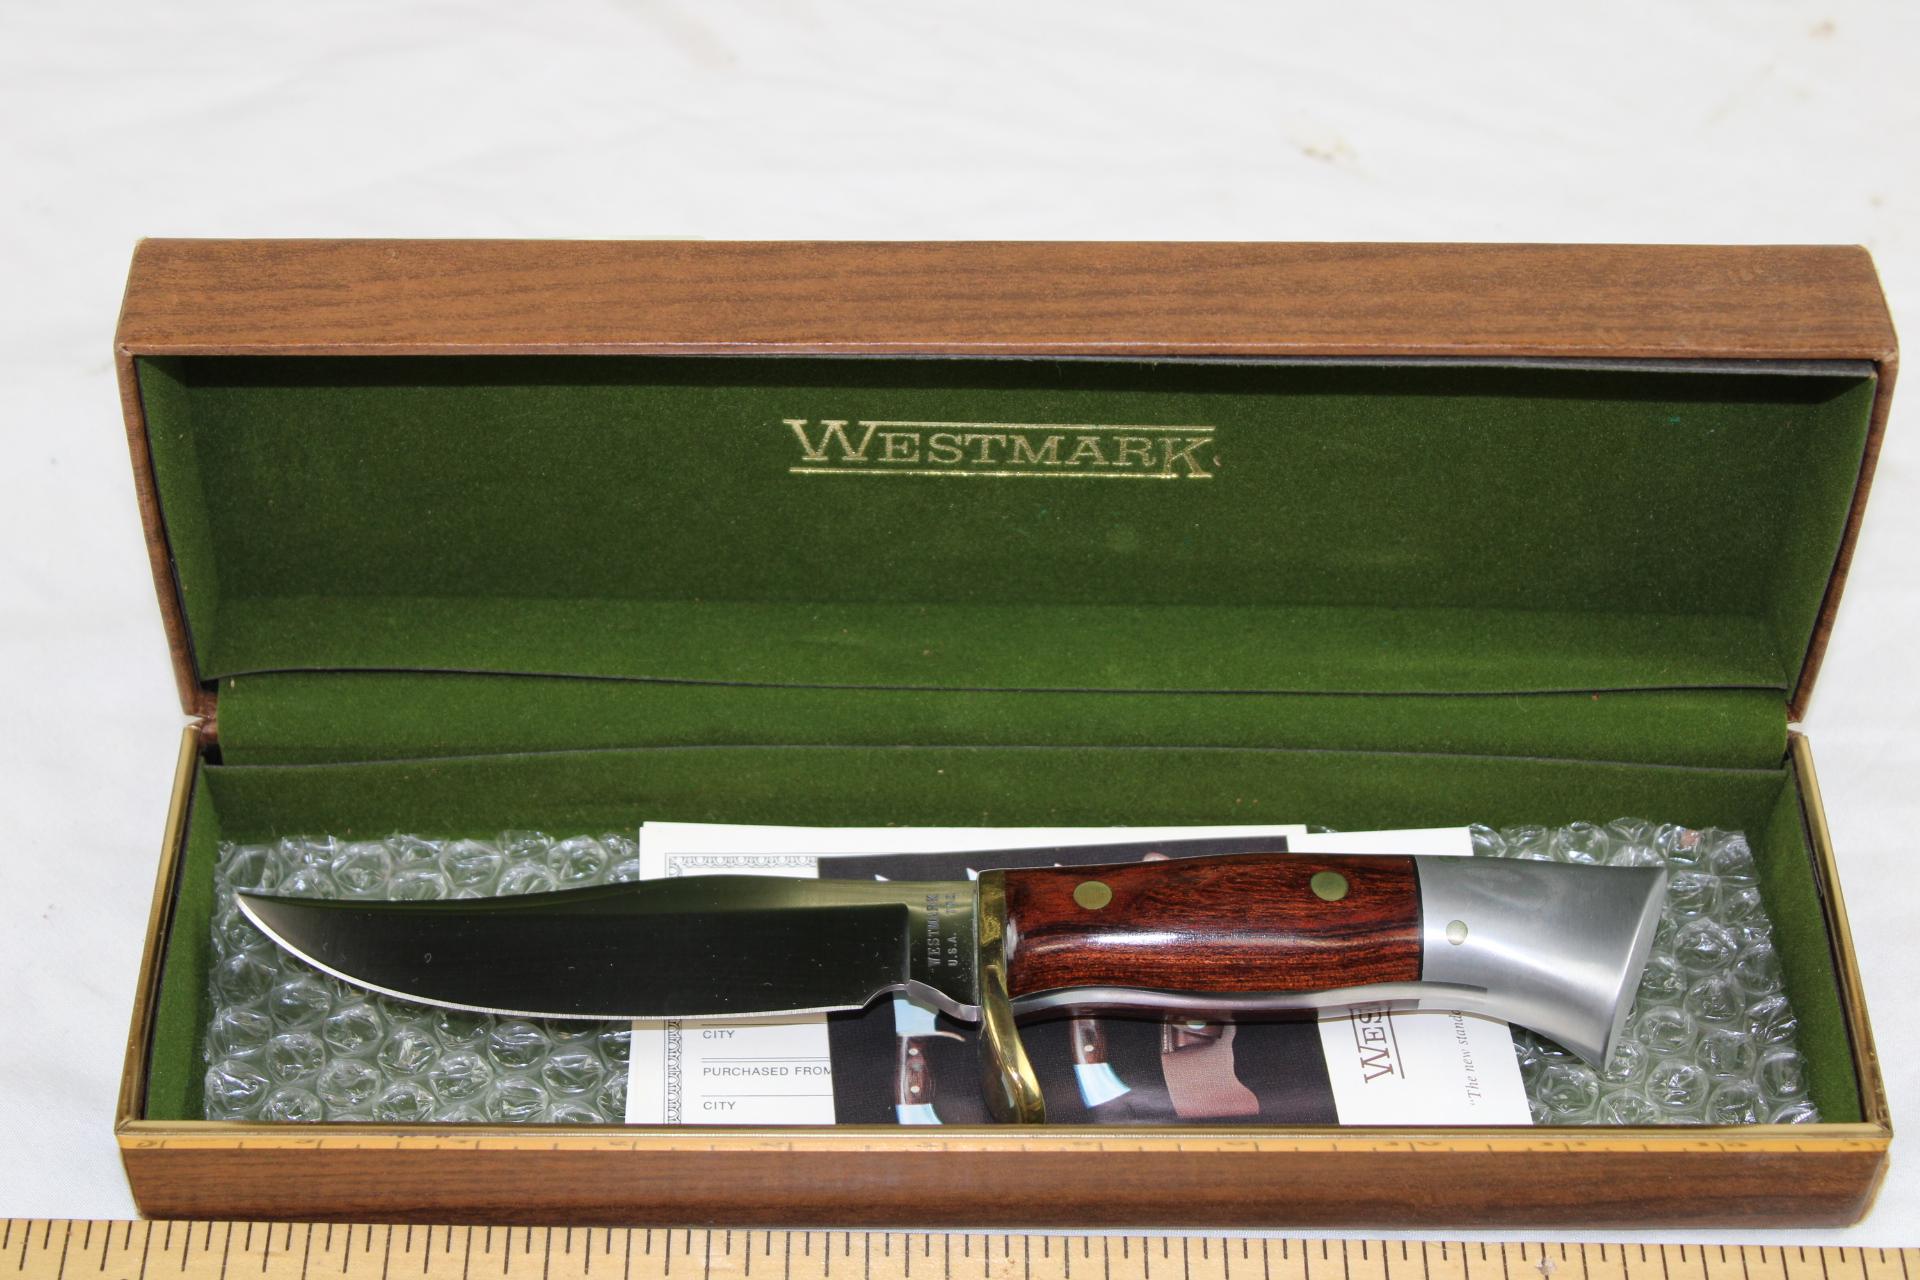 Westmark Model 702 Sportsman's Knife and Box